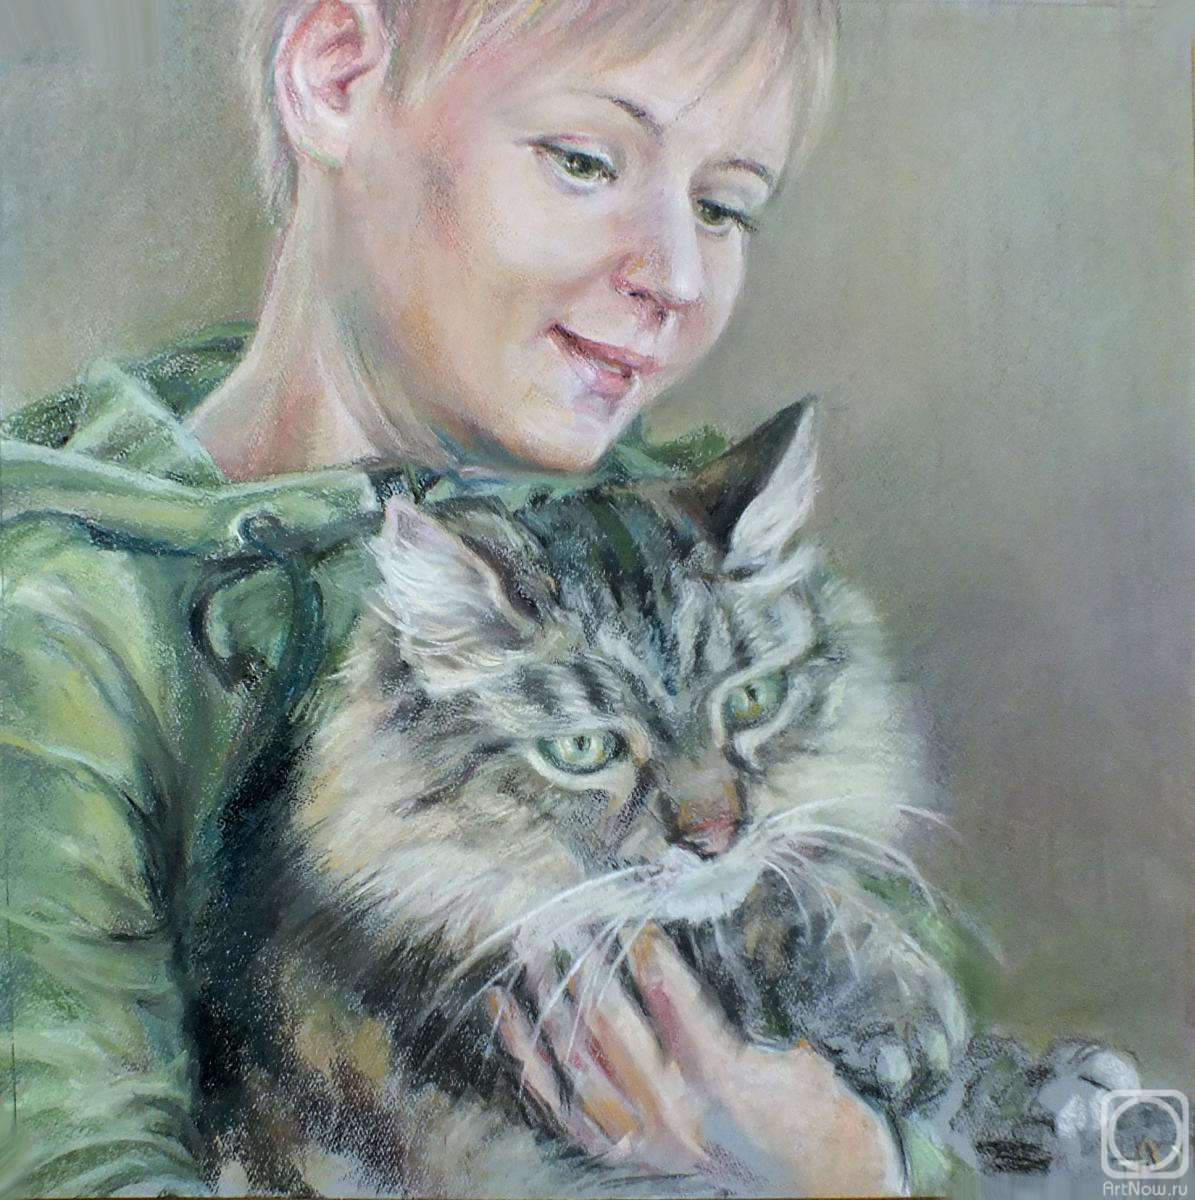 Odnolko Natalia. Girl with a cat